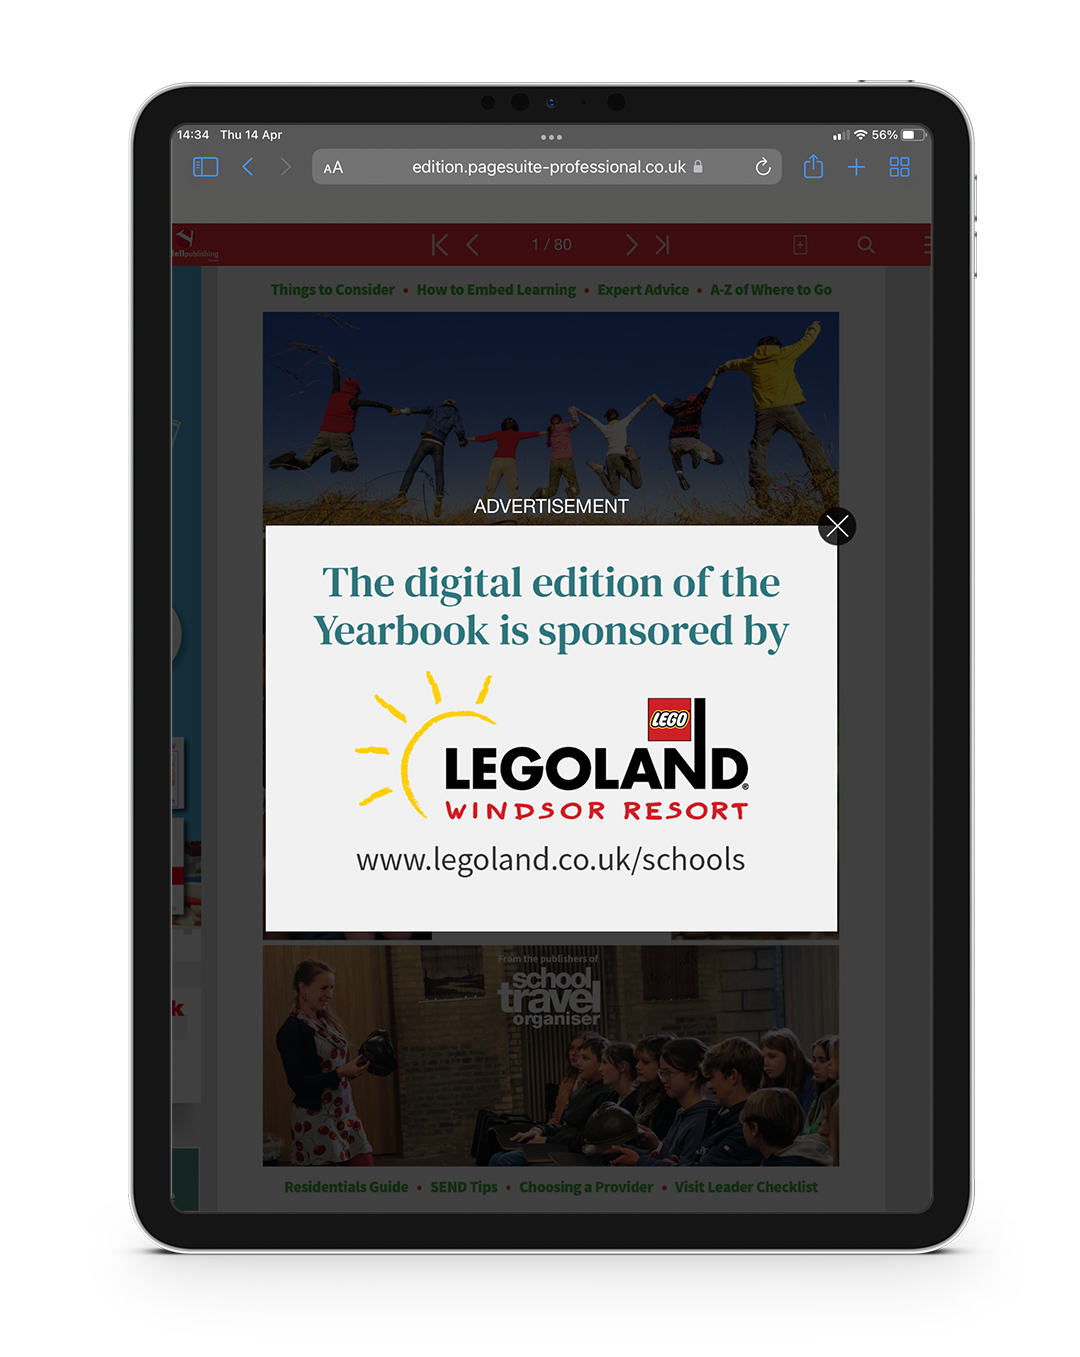 LOtC Yearbook digital edition sponsorship